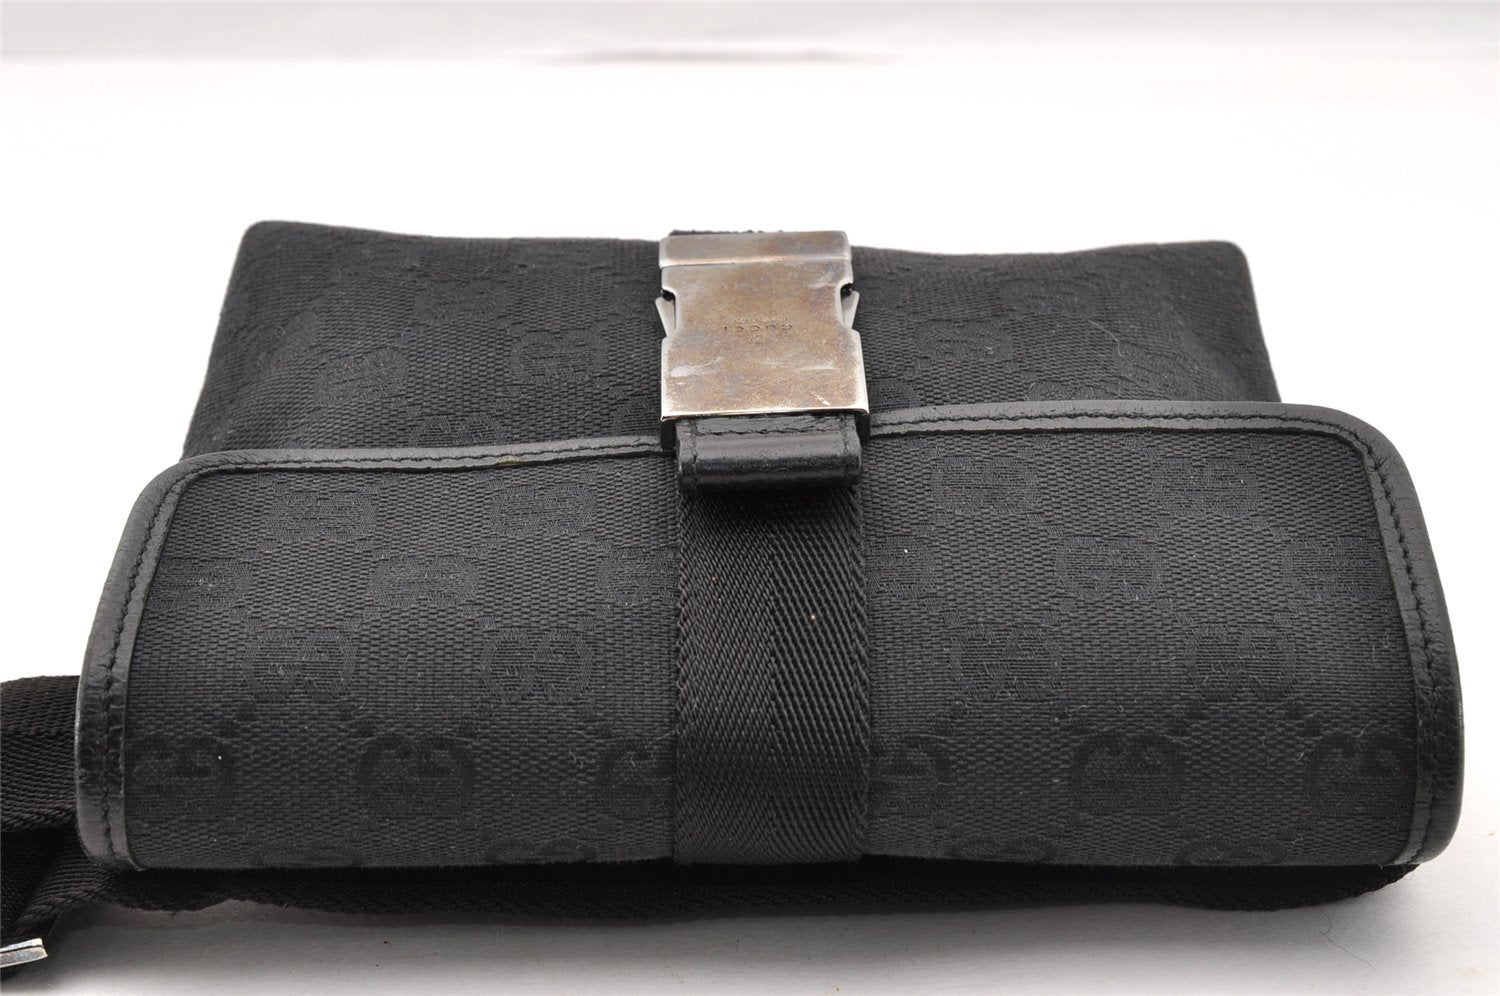 Authentic GUCCI Vintage Waist Body Bag Purse Canvas Leather 131236 Black 4843I